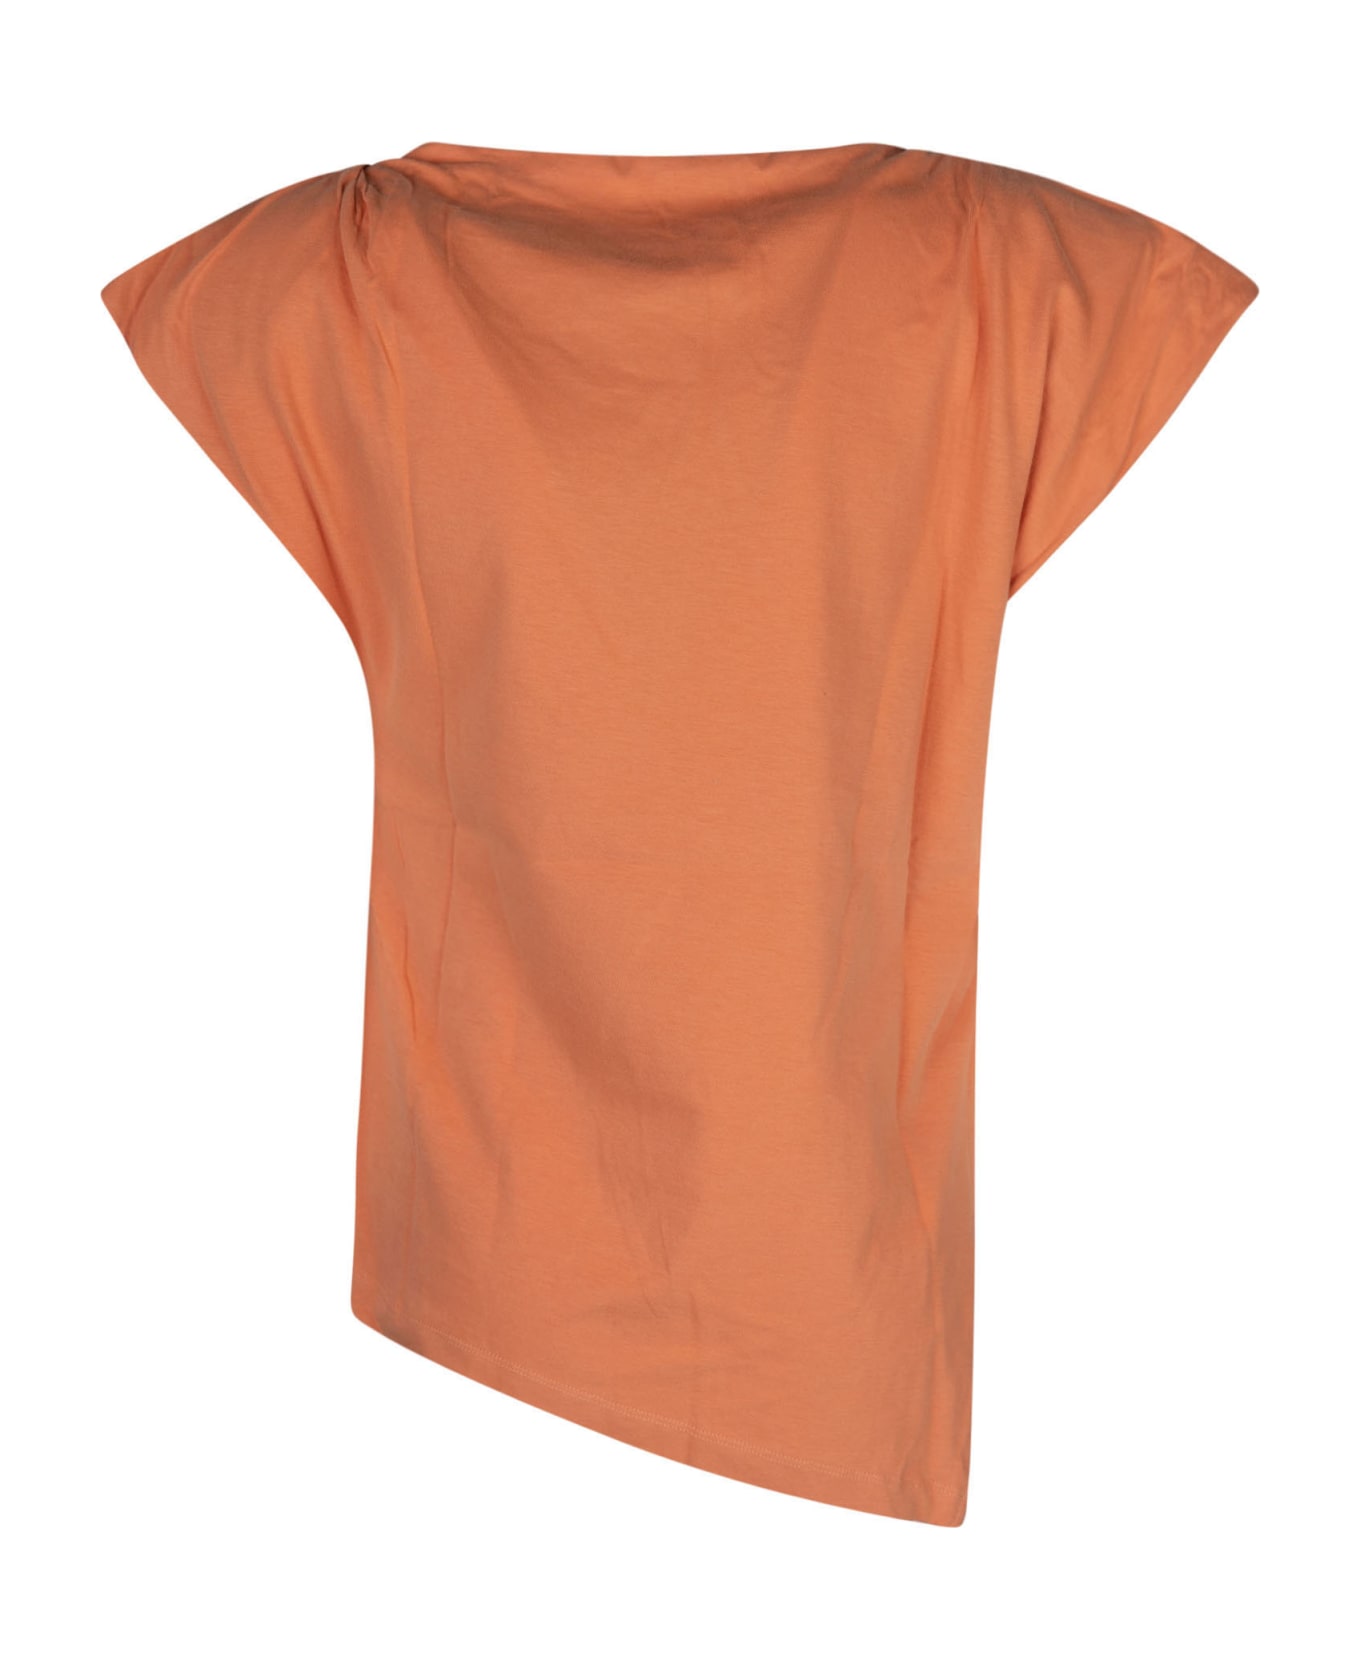 Isabel Marant Sebani T-shirt - Peach Tシャツ